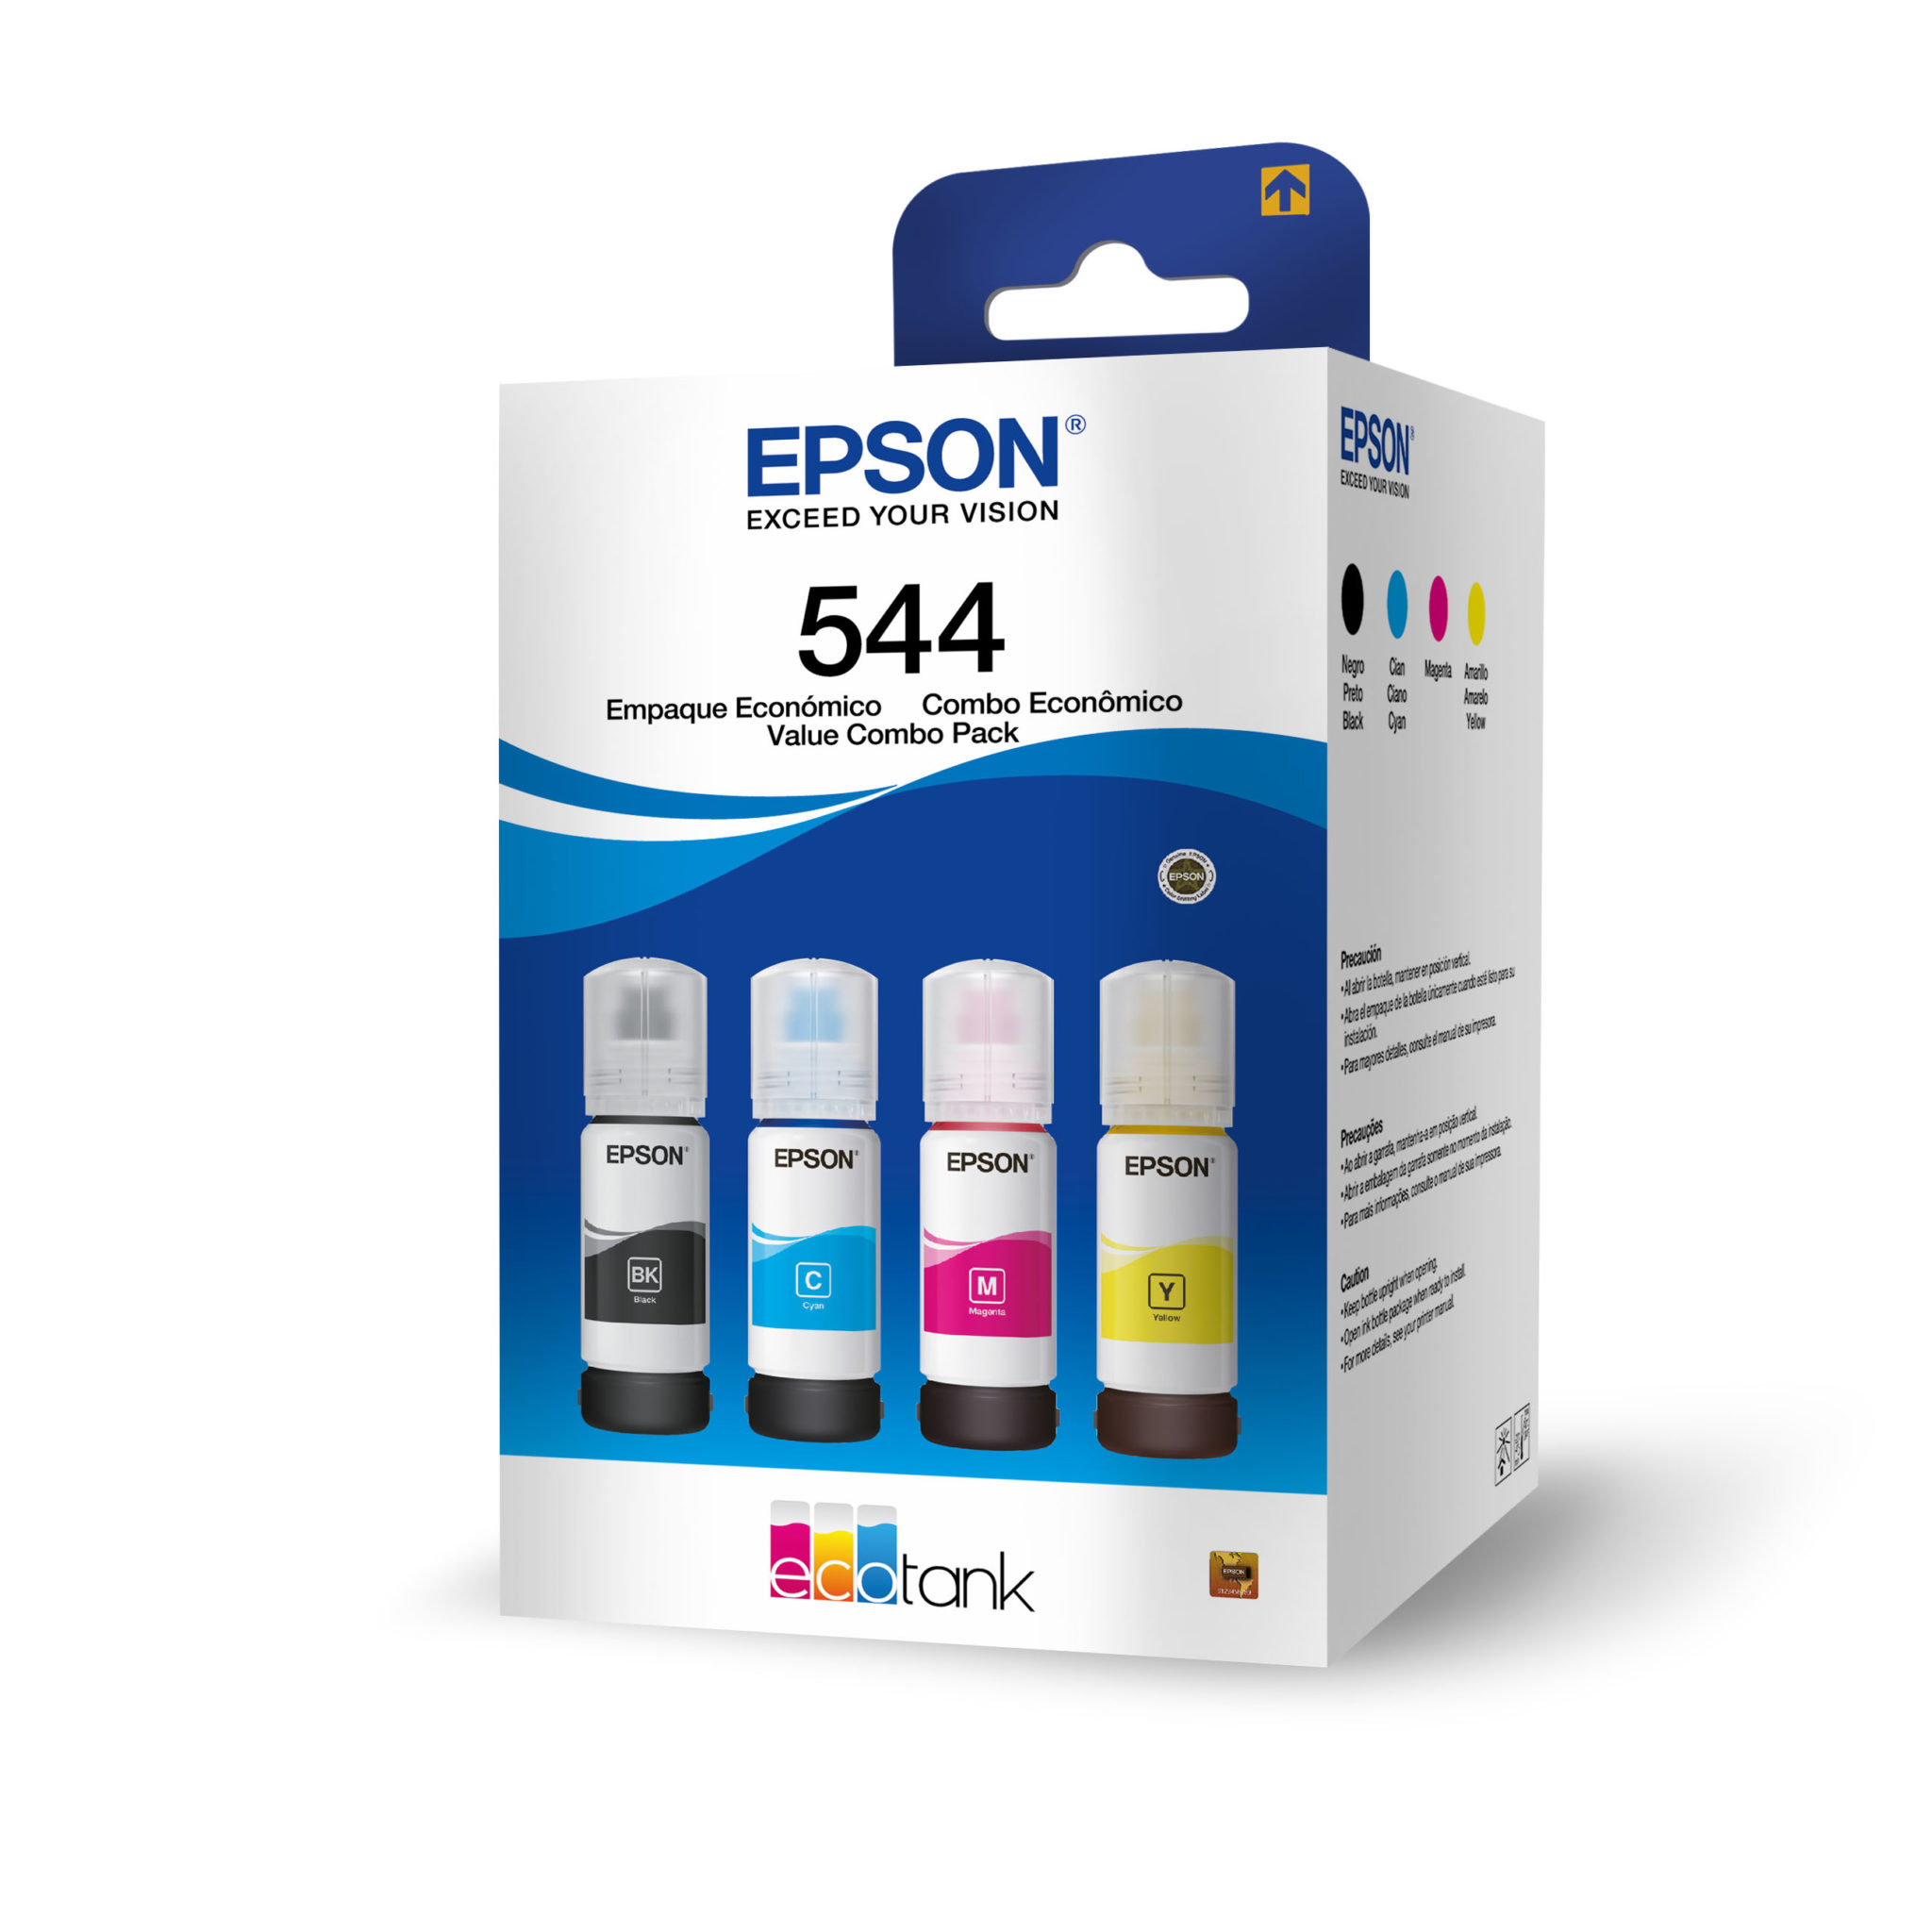 Impresora Epson Color Ecotank L1250 Tinta Ideal Para El Hogar Alca 7373